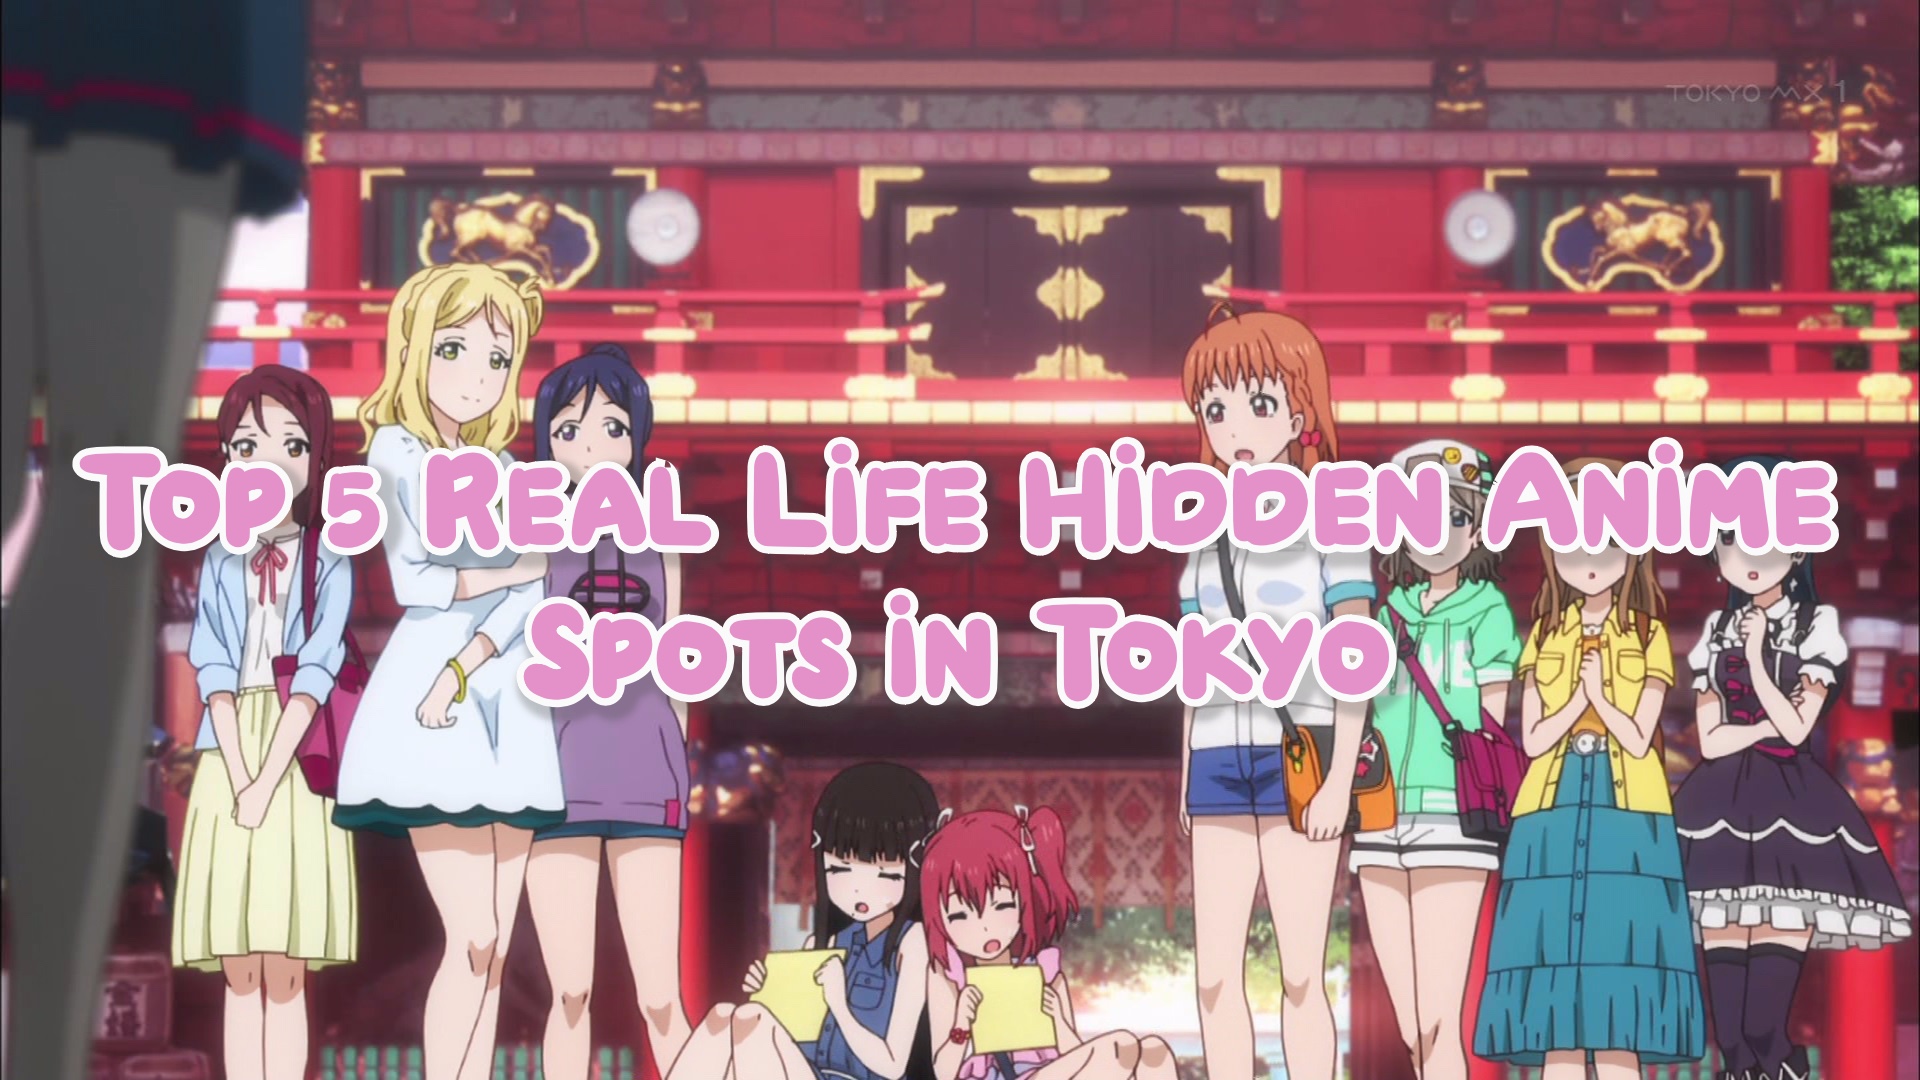 5 Real Life Hidden Anime Spots in Tokyo